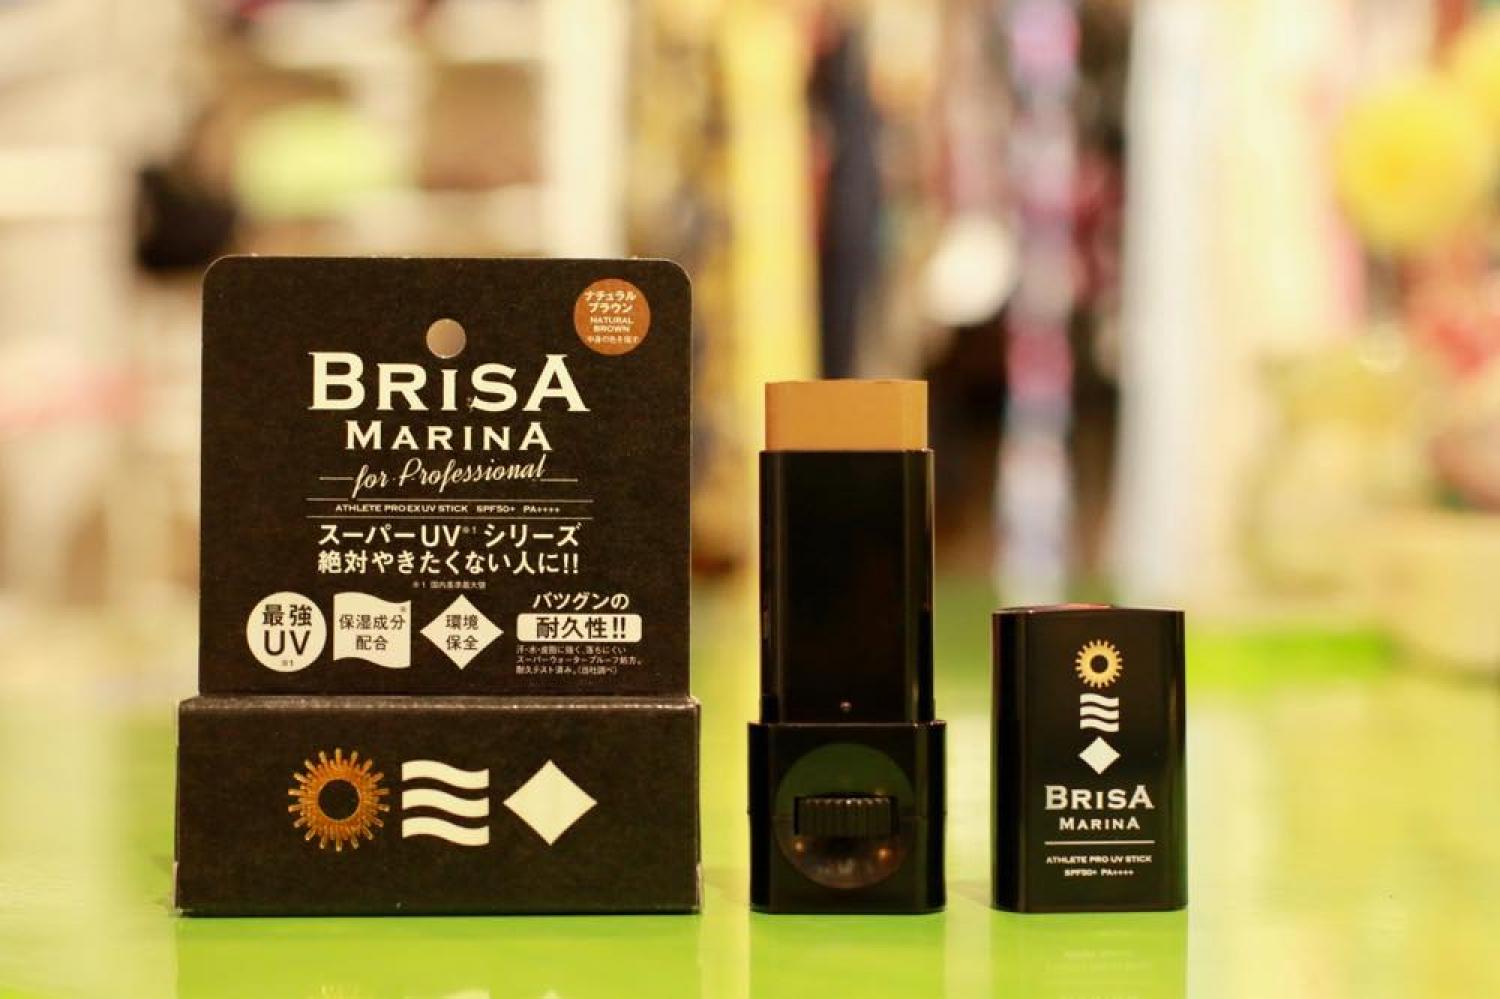 BRISA MARINA ATHLETE PRO EX UV STICK LOT PROFESSIONAL NATURAL BROWN